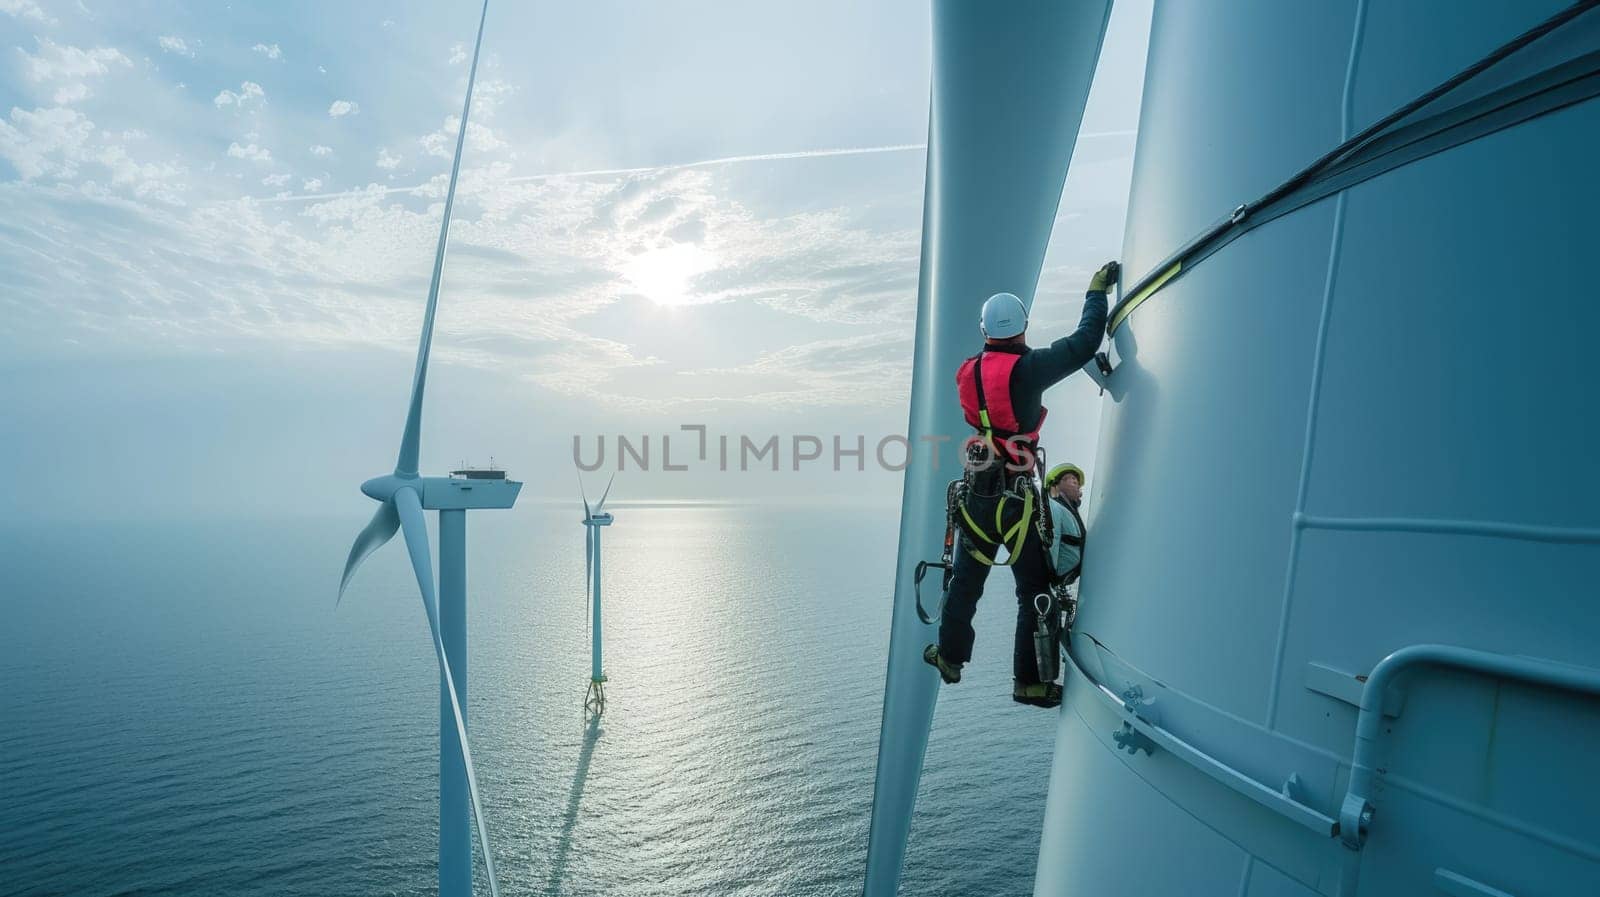 Team builds ocean wind turbine for fluid-based adventure AIG41 by biancoblue